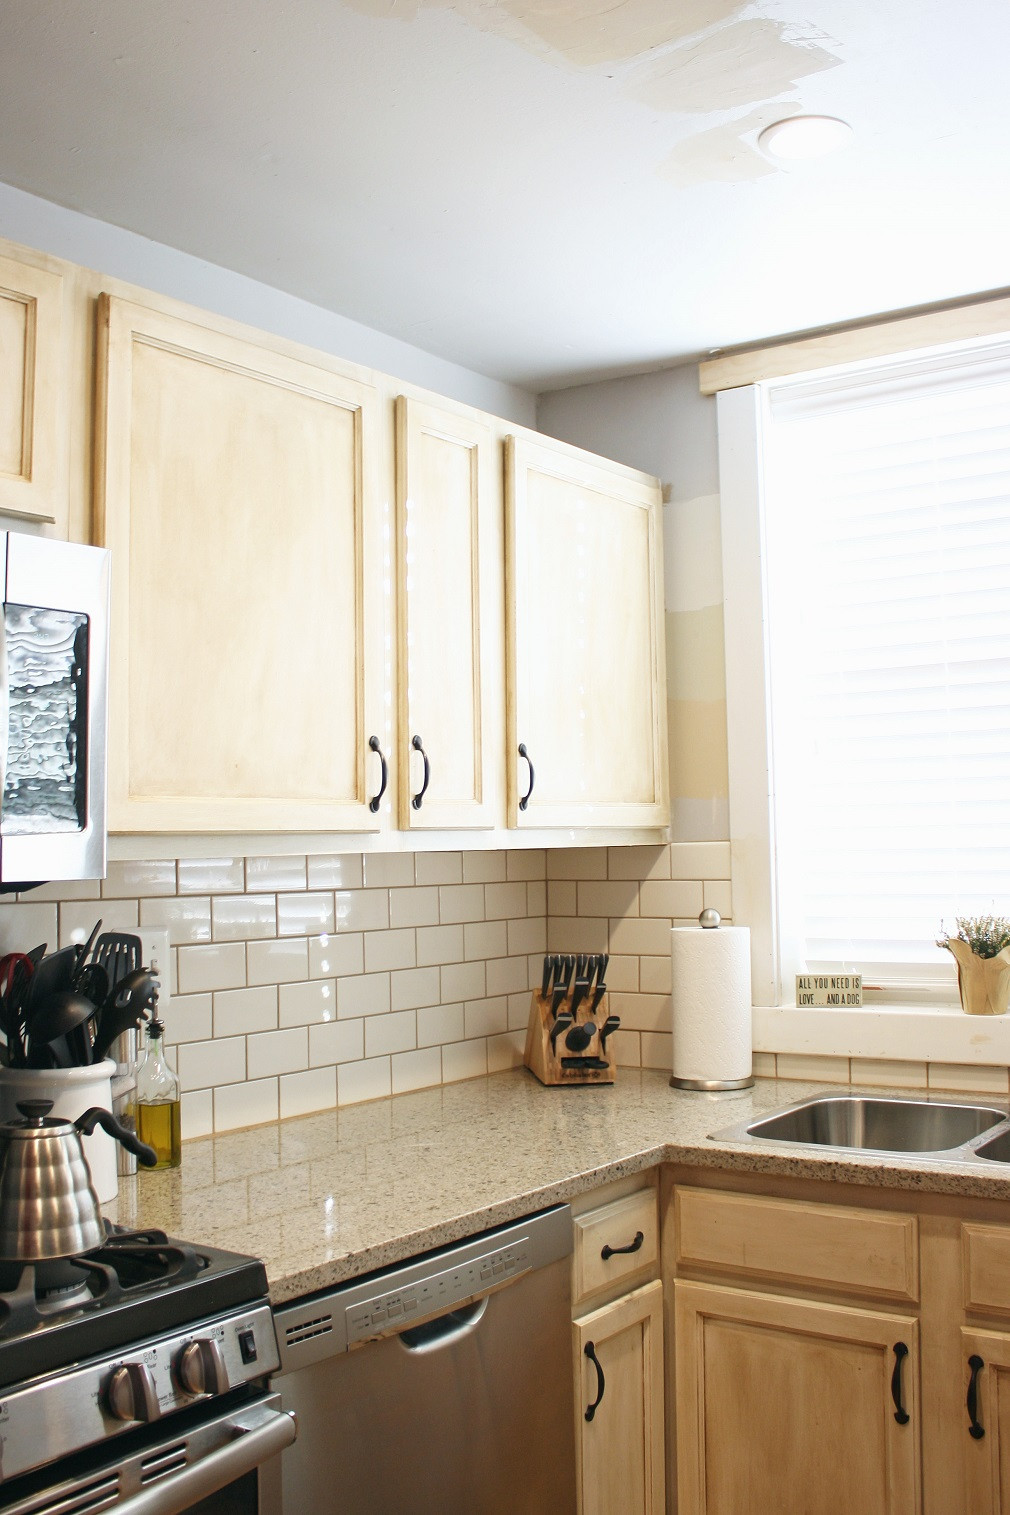 Kitchen Backsplash Height
 Our new kitchen countertops and backsplash… – Less Than